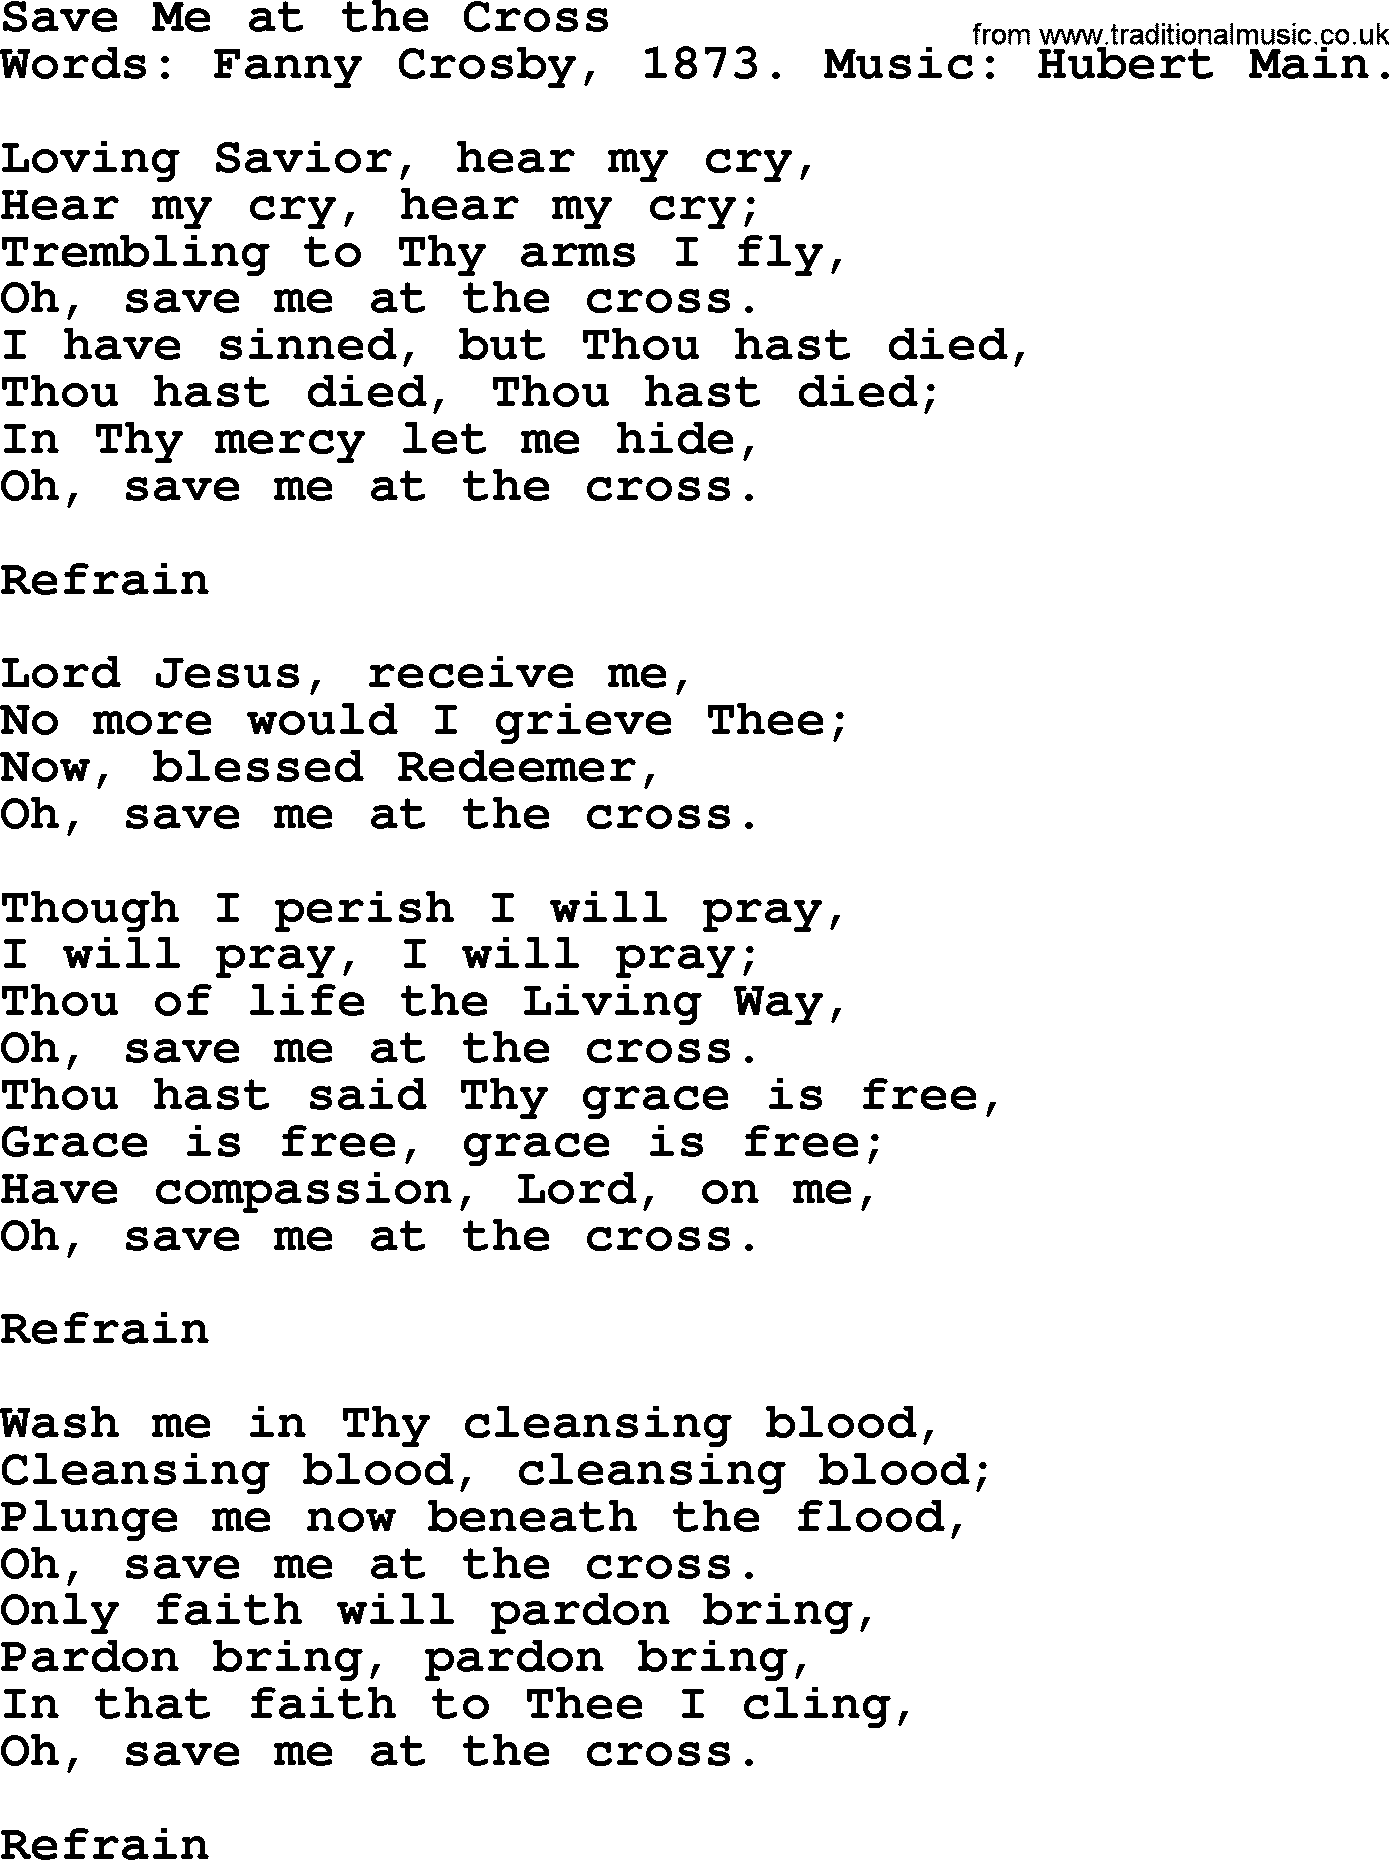 Fanny Crosby song: Save Me At The Cross, lyrics